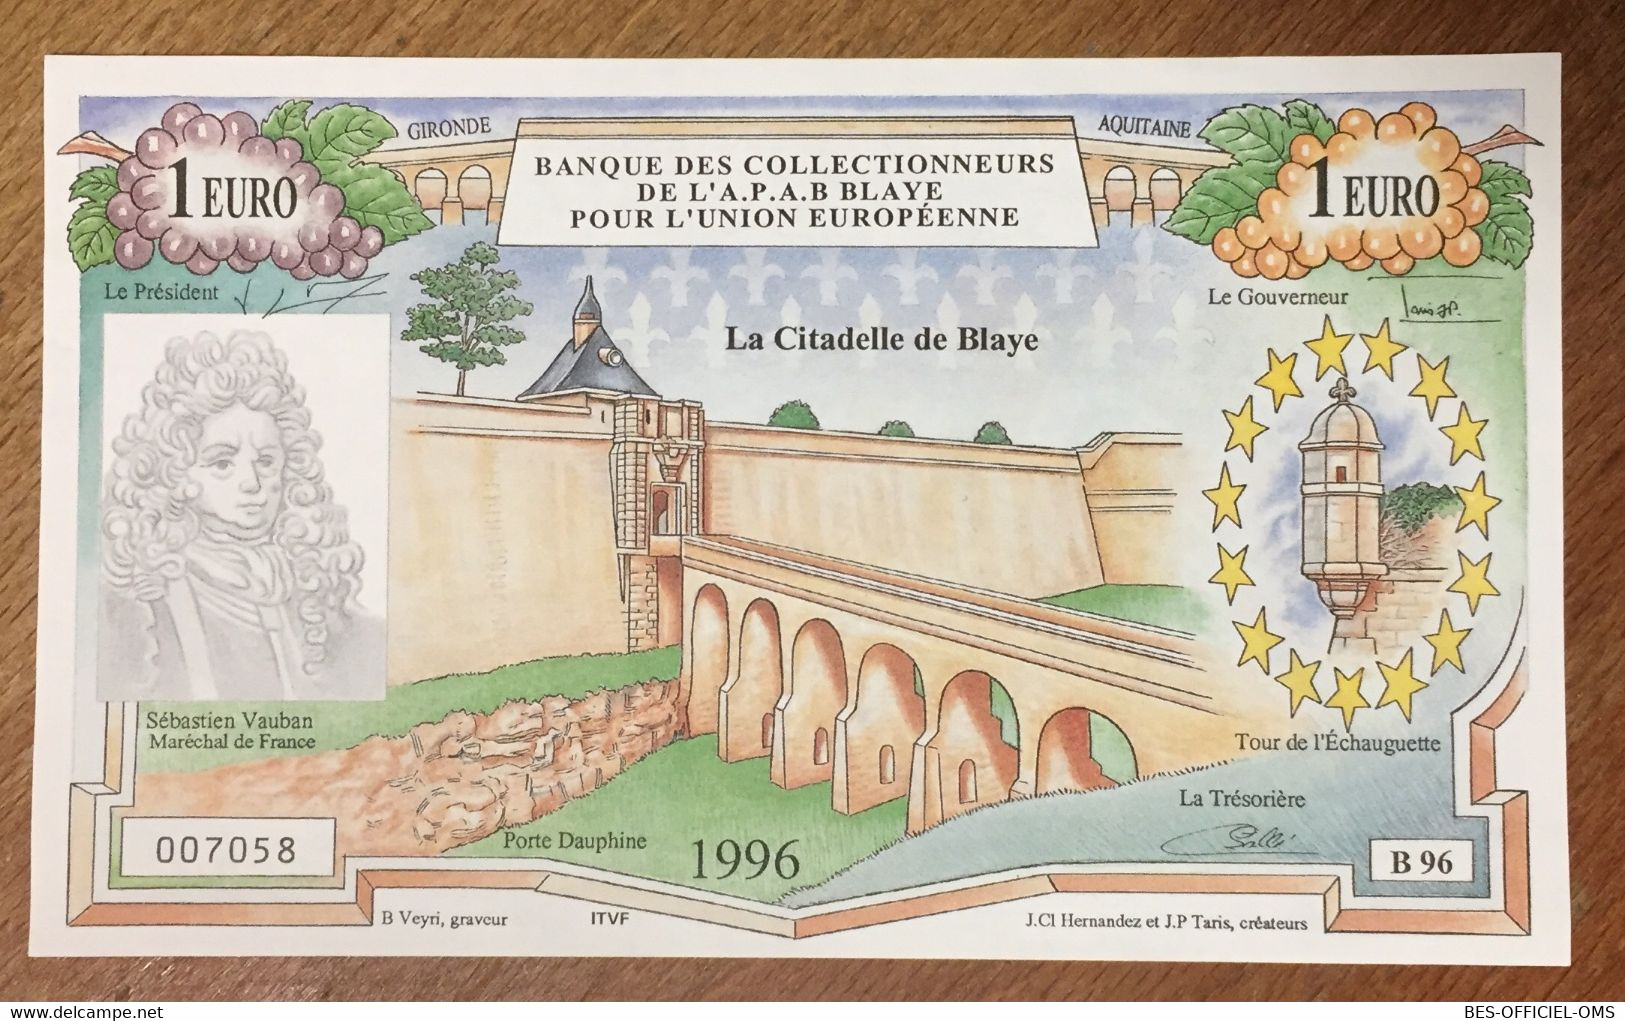 BILLET 1 EURO SOUVENIR BLAYE 1996 BNP 7 FRANCS EURO SCHEIN PAPER MONEY BANKNOTE PAPER LOCAL CURRENCY - Pruebas Privadas